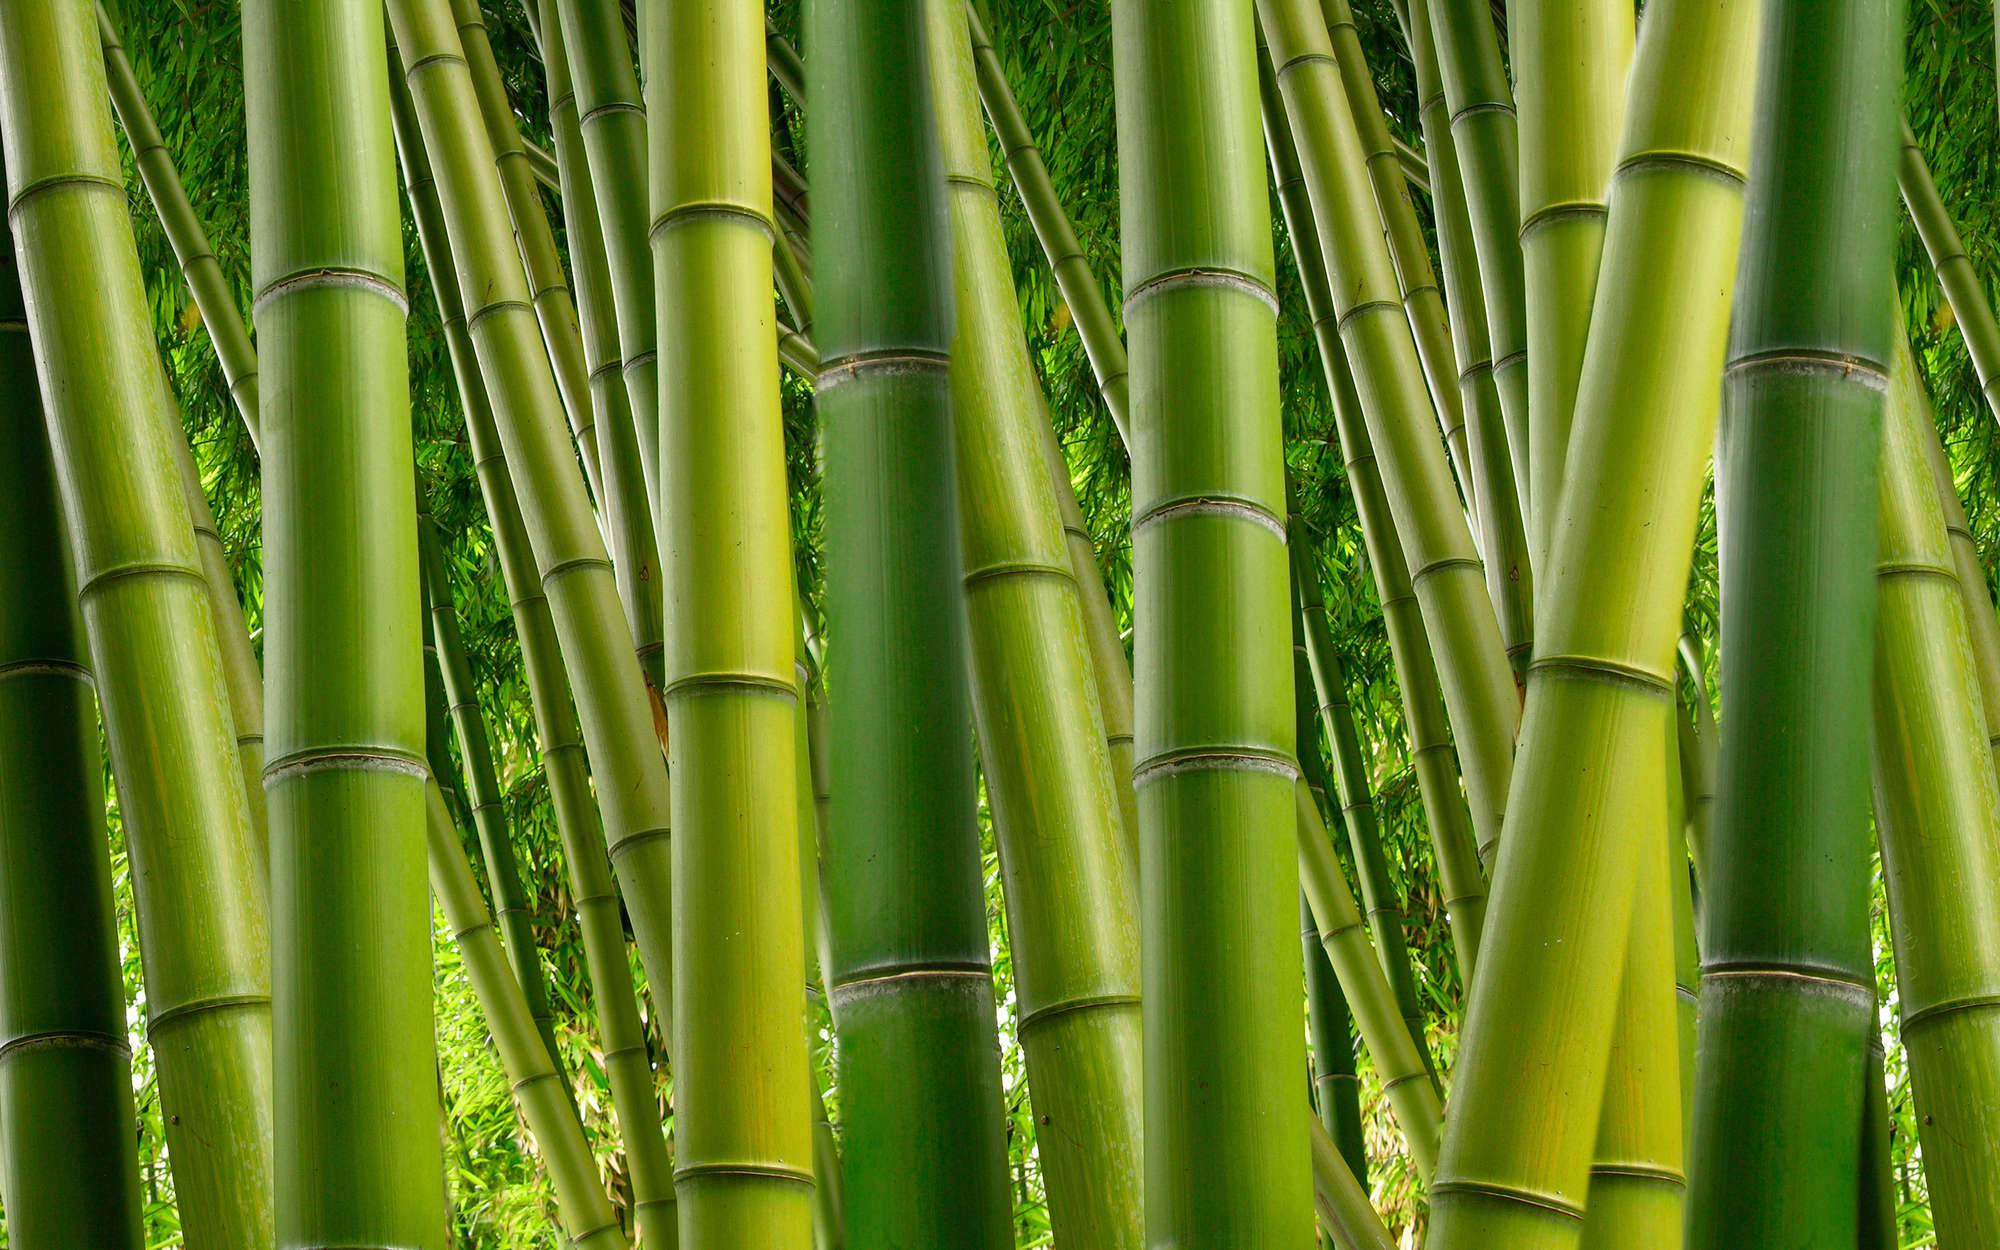             Natur Fototapete Bambus in Grün – Perlmutt Glattvlies
        